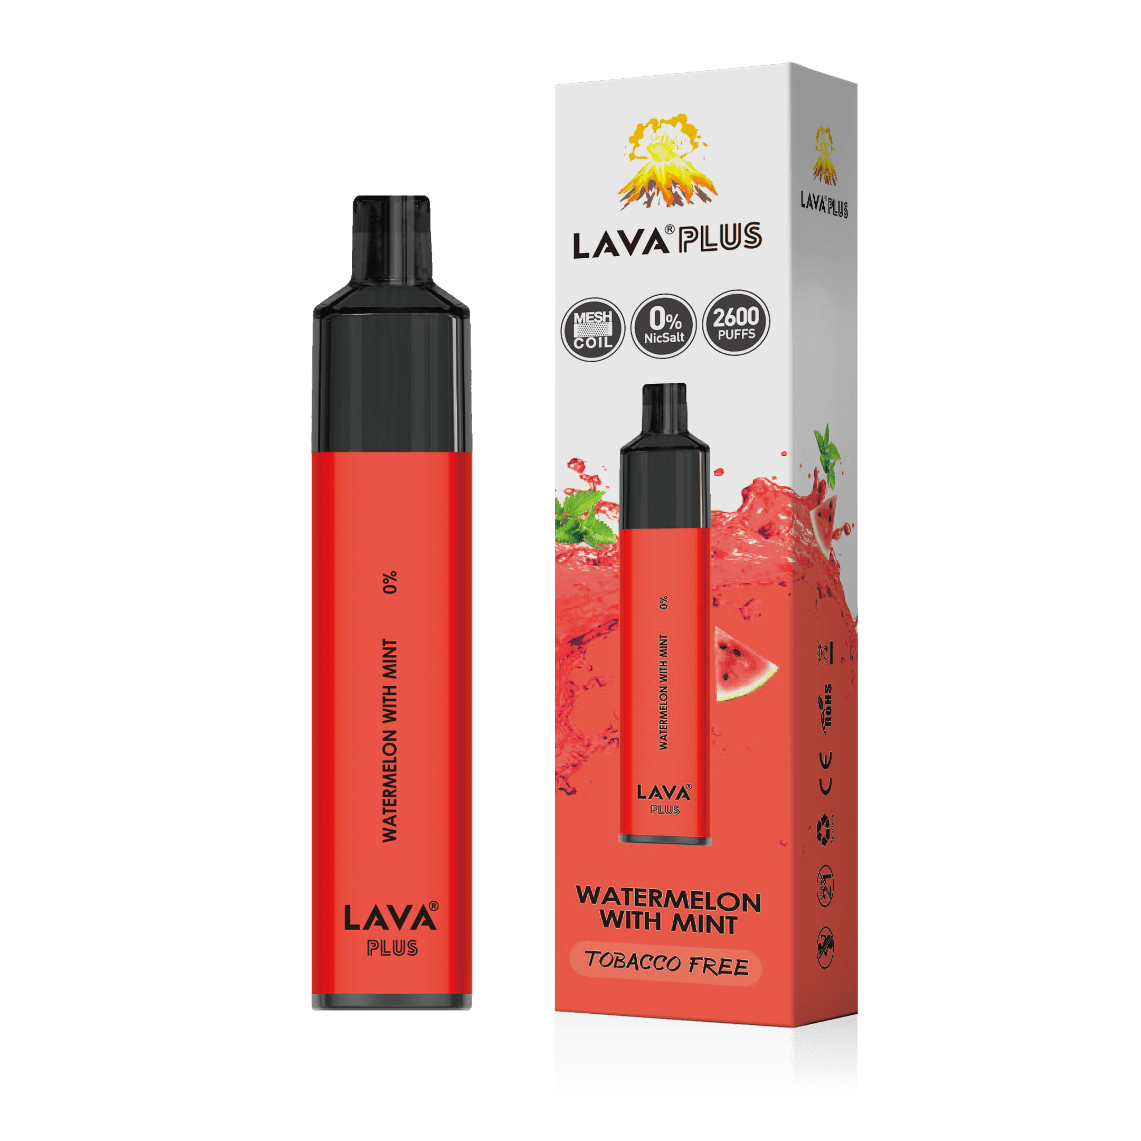 Lava Plus 2600 Puffs Disposable Zero Nicotine Free 0% - Watermelon with Mint Best Sales Price - Disposables